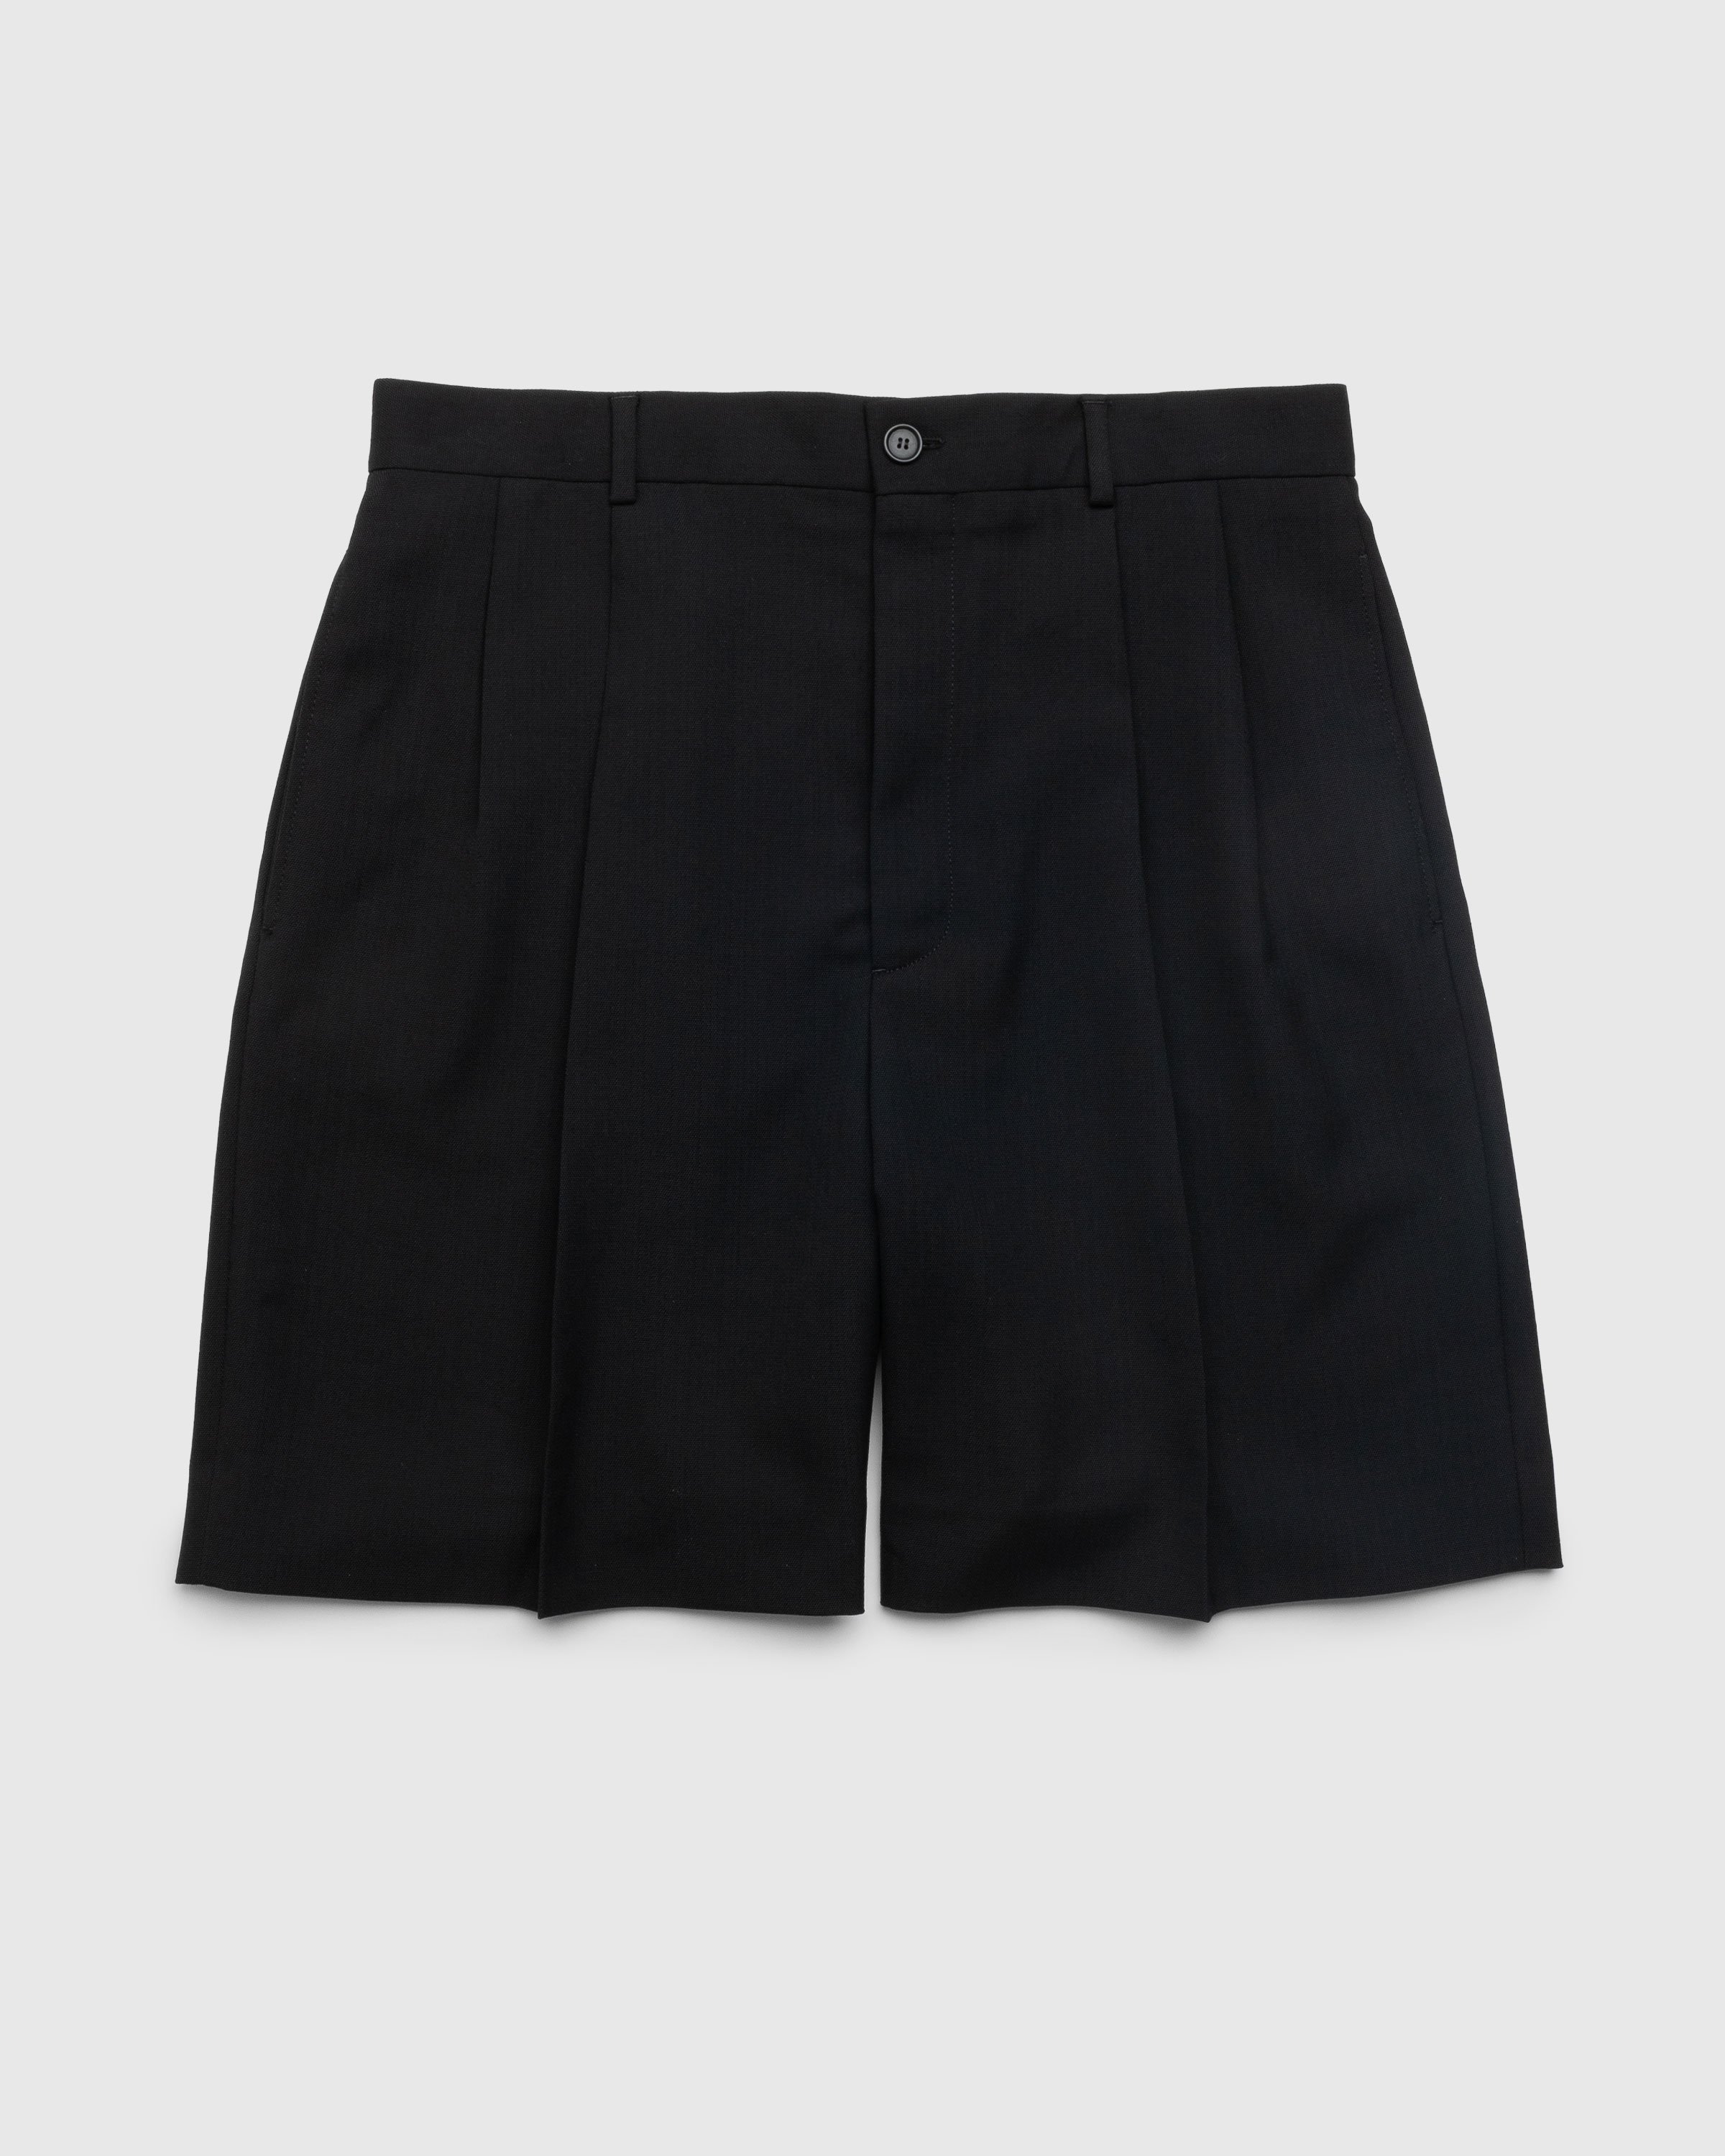 Acne Studios – Tailored Pleated Shorts Black | Highsnobiety Shop